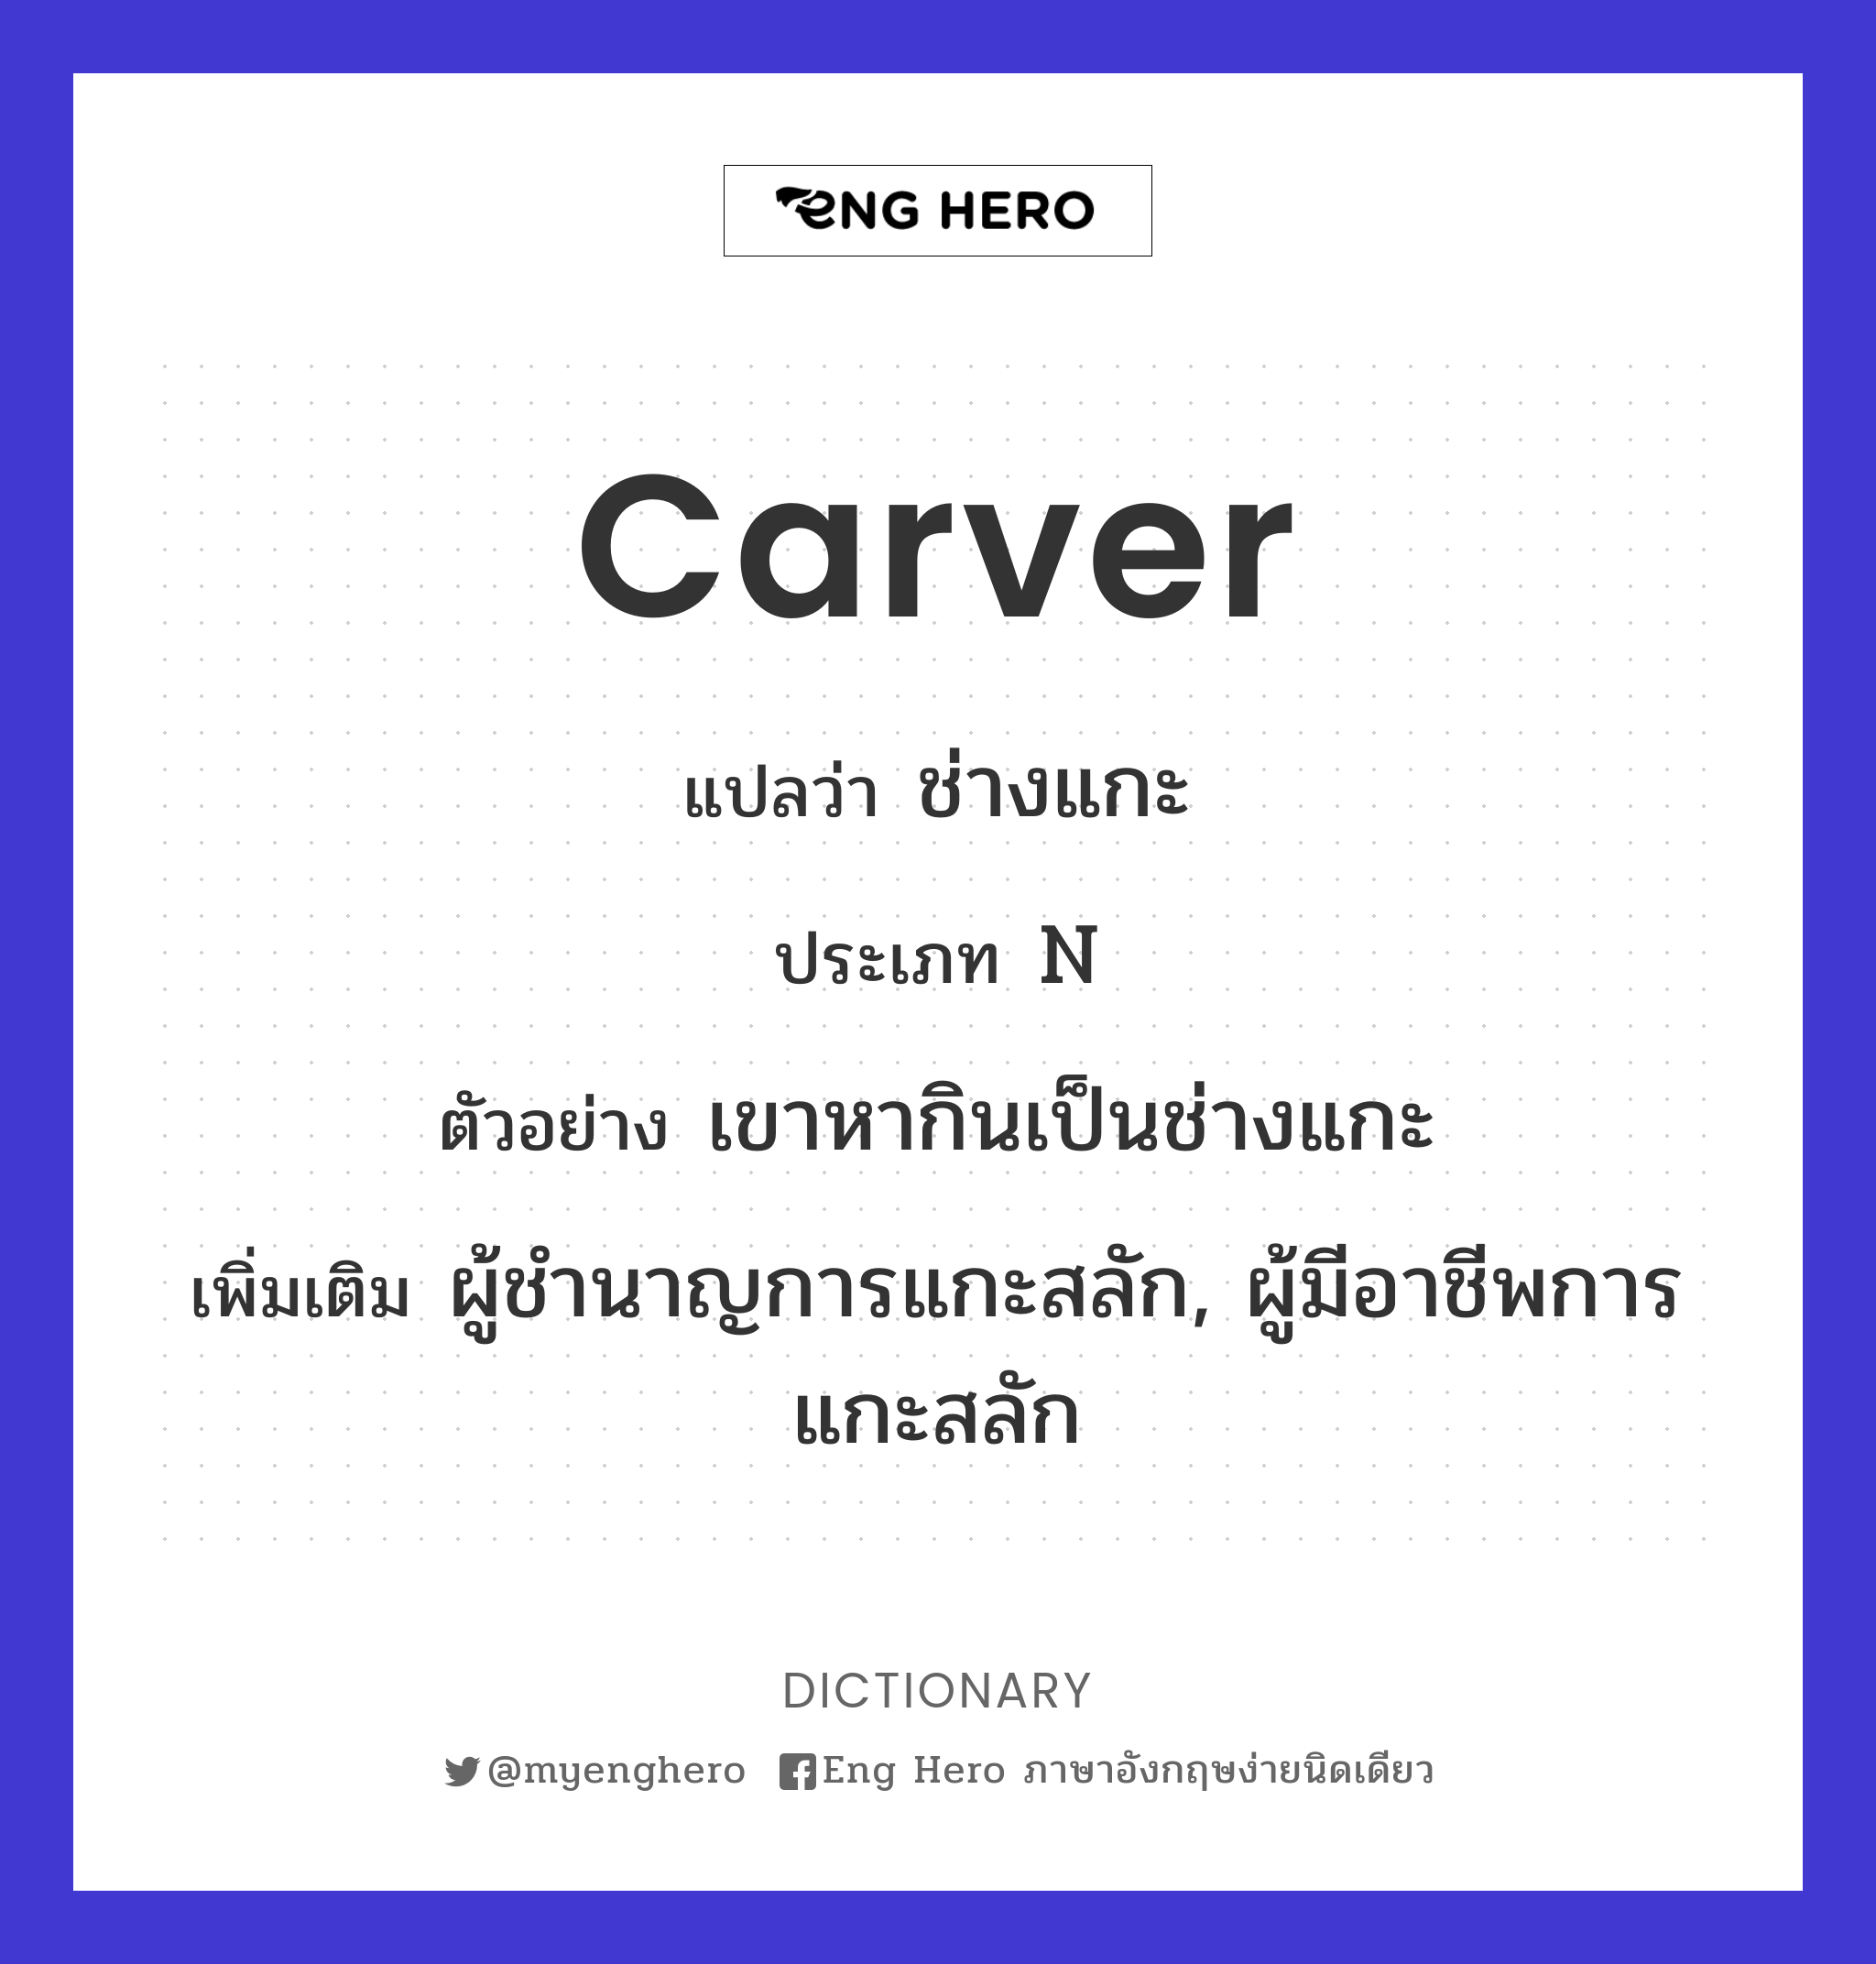 carver